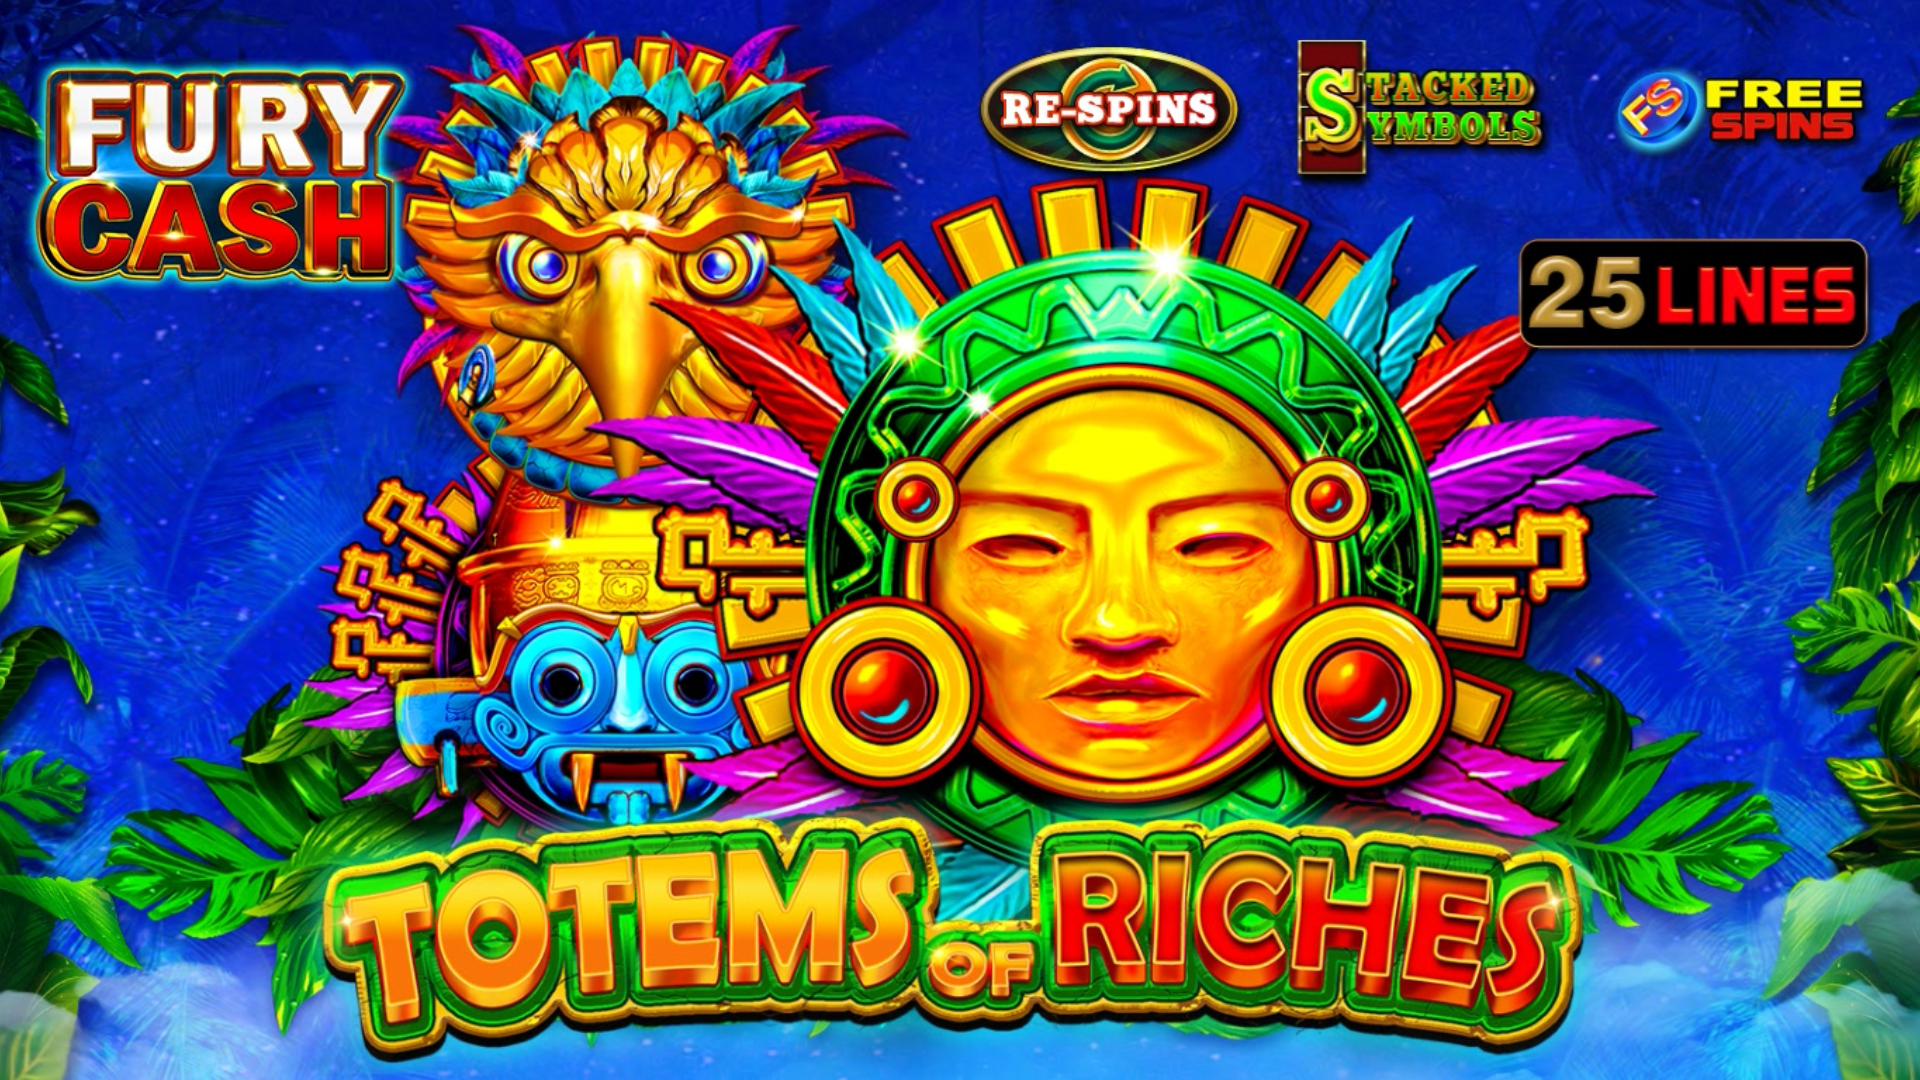 egt games general series bonus prize general totems of riches fury cash